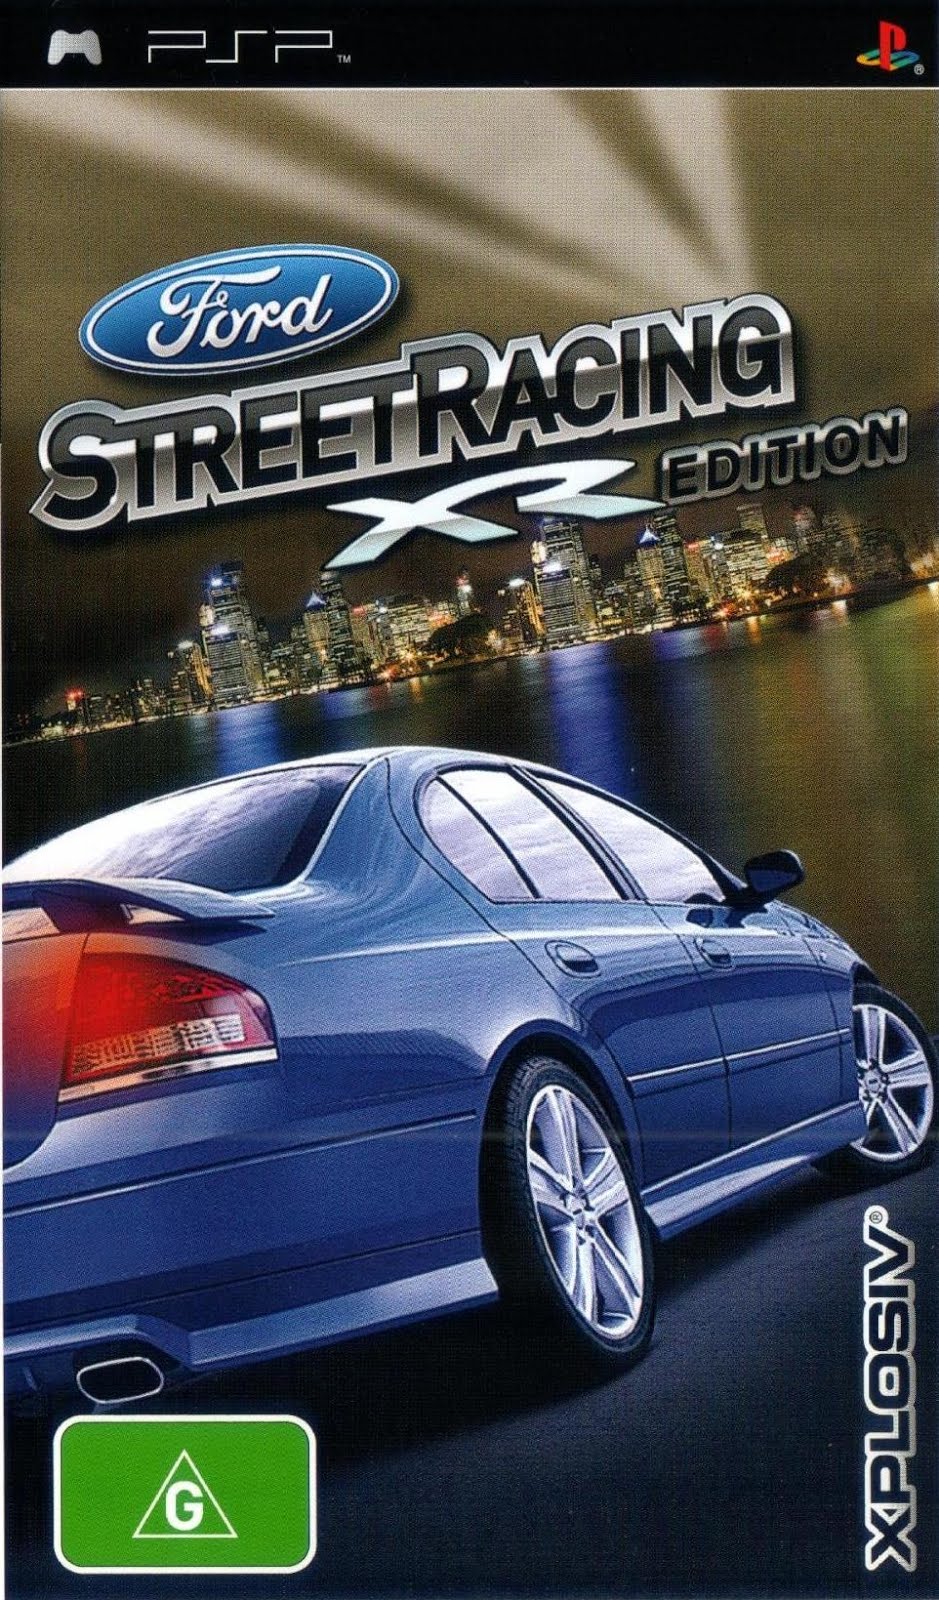 ford-street-racing-xr-edition-europe-playstation-portable_1483502484.jpg